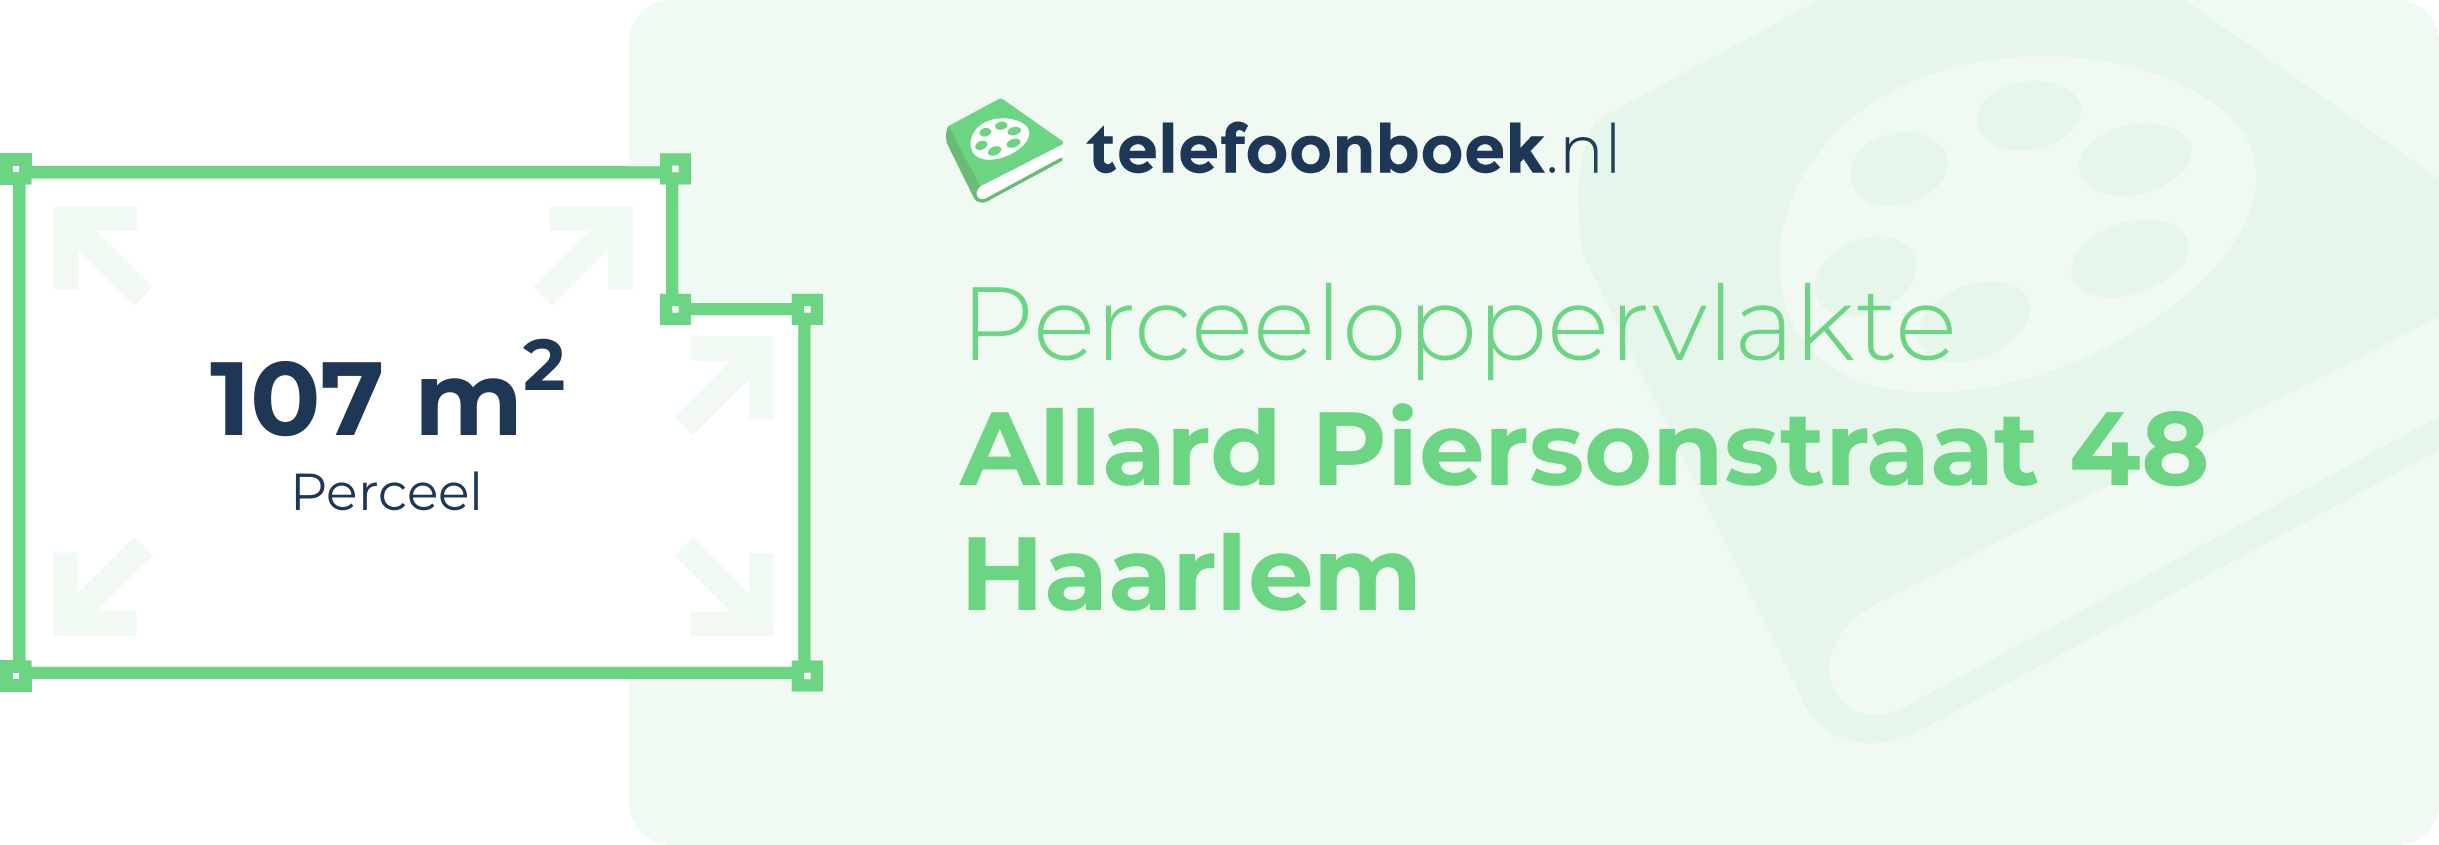 Perceeloppervlakte Allard Piersonstraat 48 Haarlem